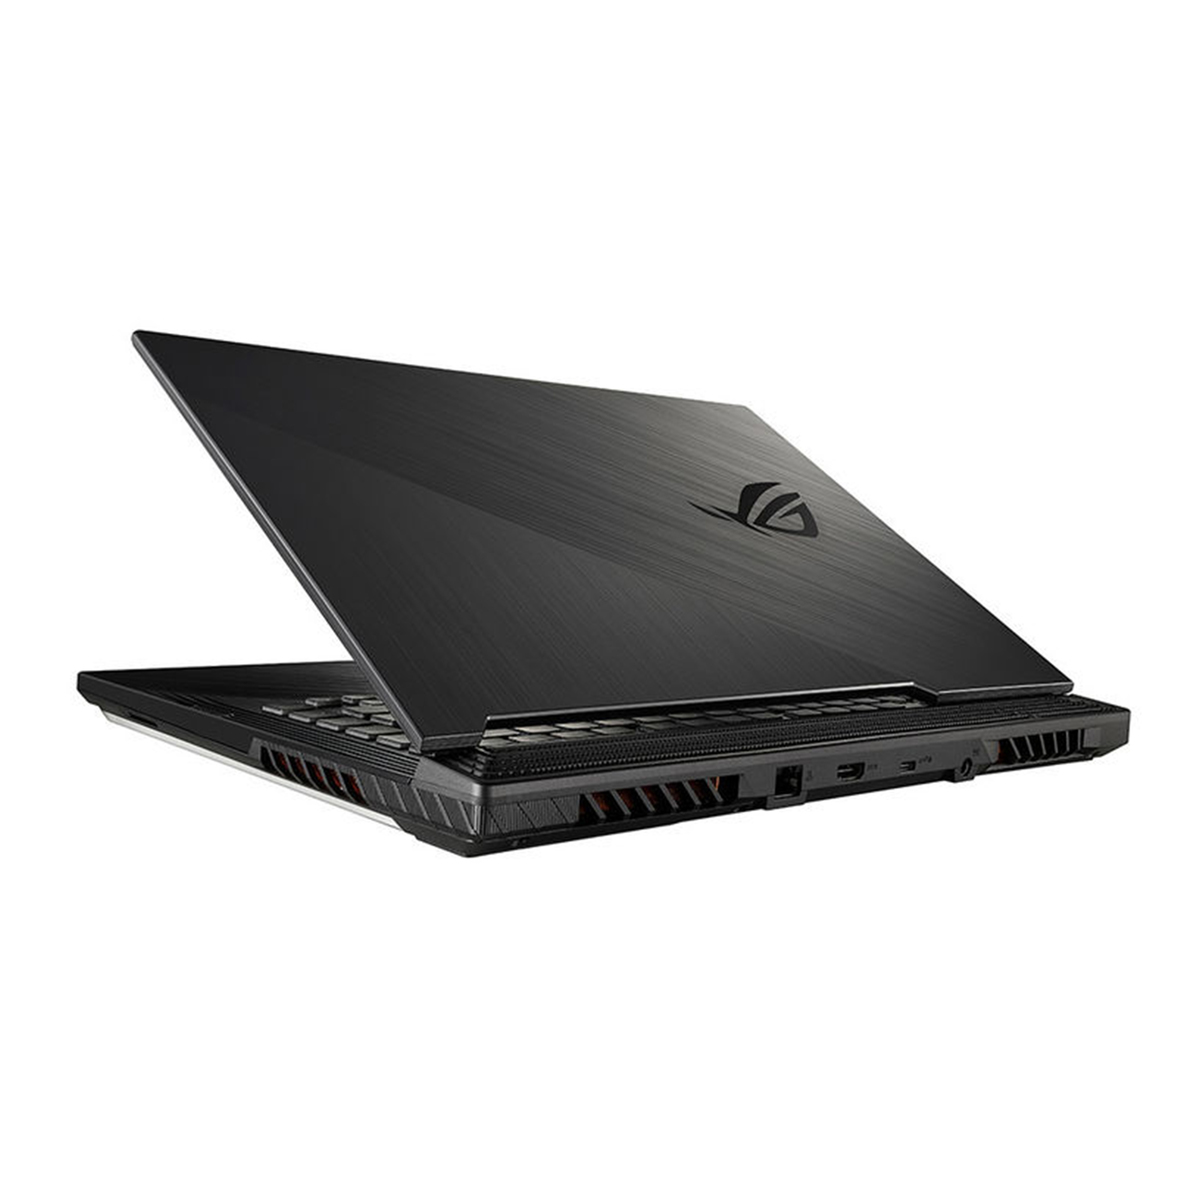 Asus ROG Strix Gaming Laptop G531GV-AL144T Core i7 Black